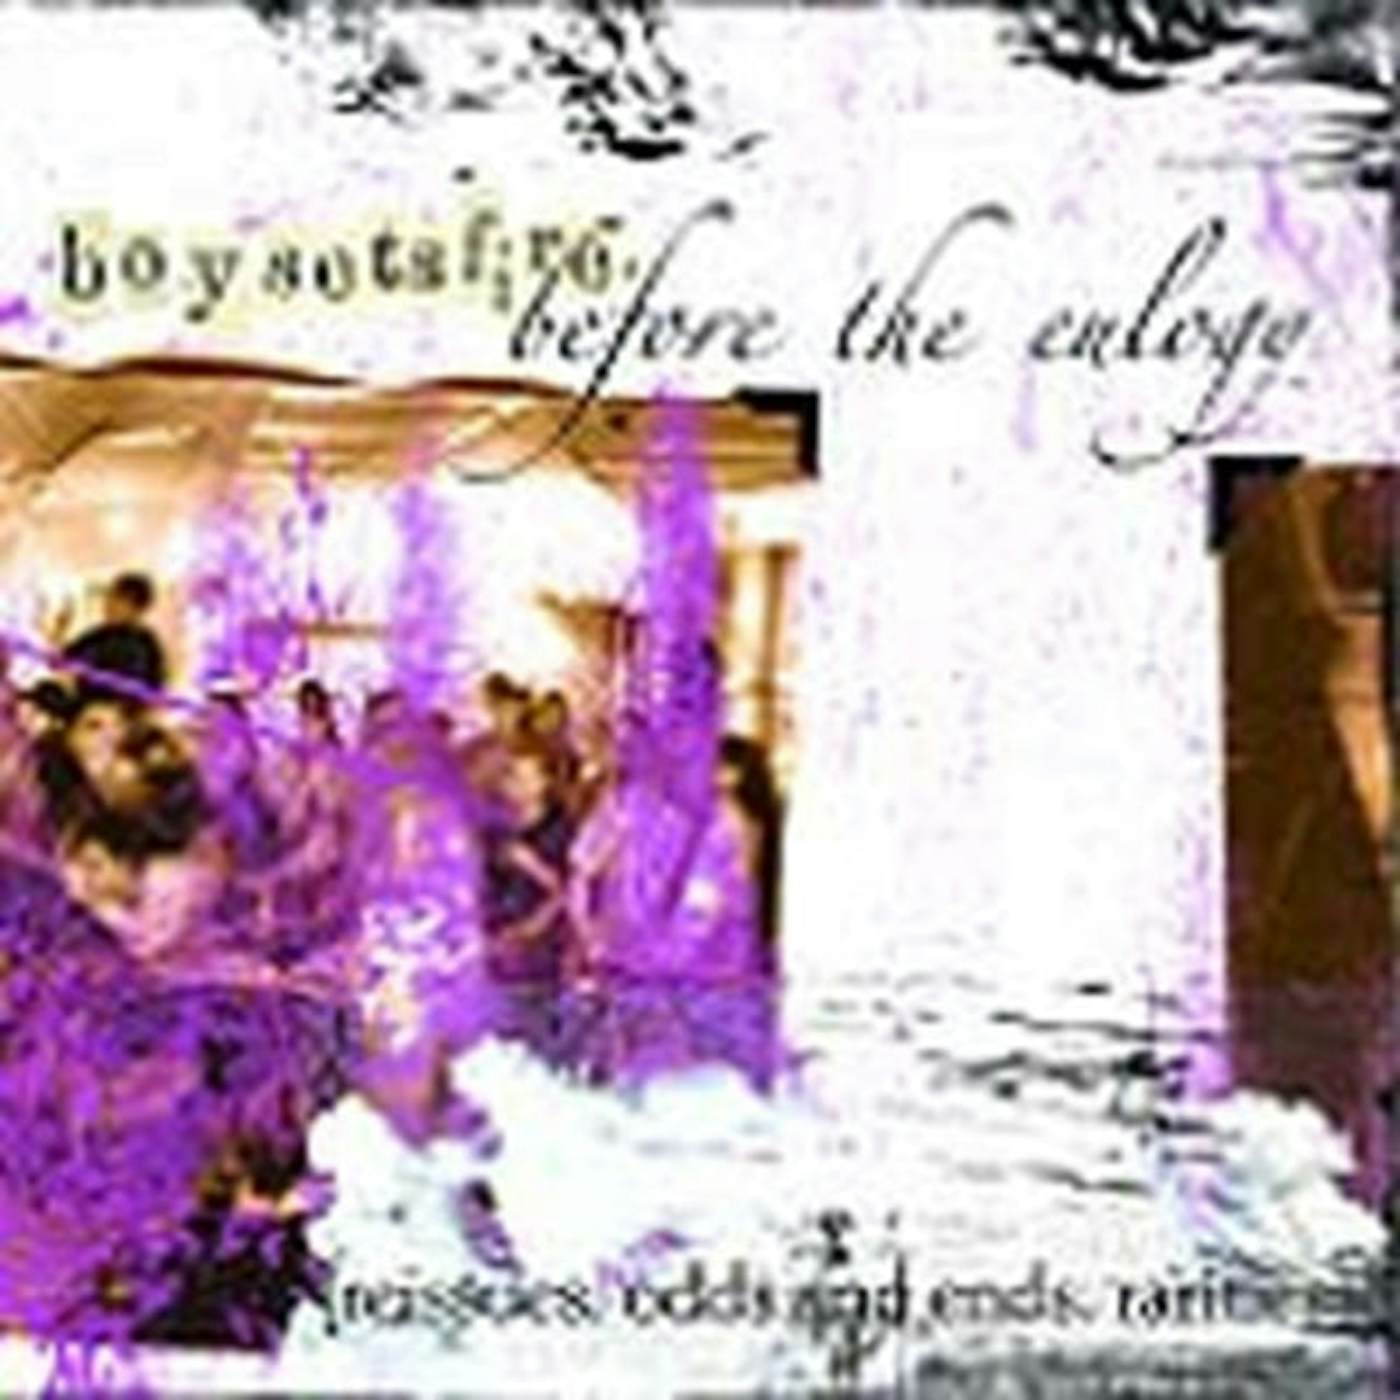 Boysetsfire CD - Before The Eulogy